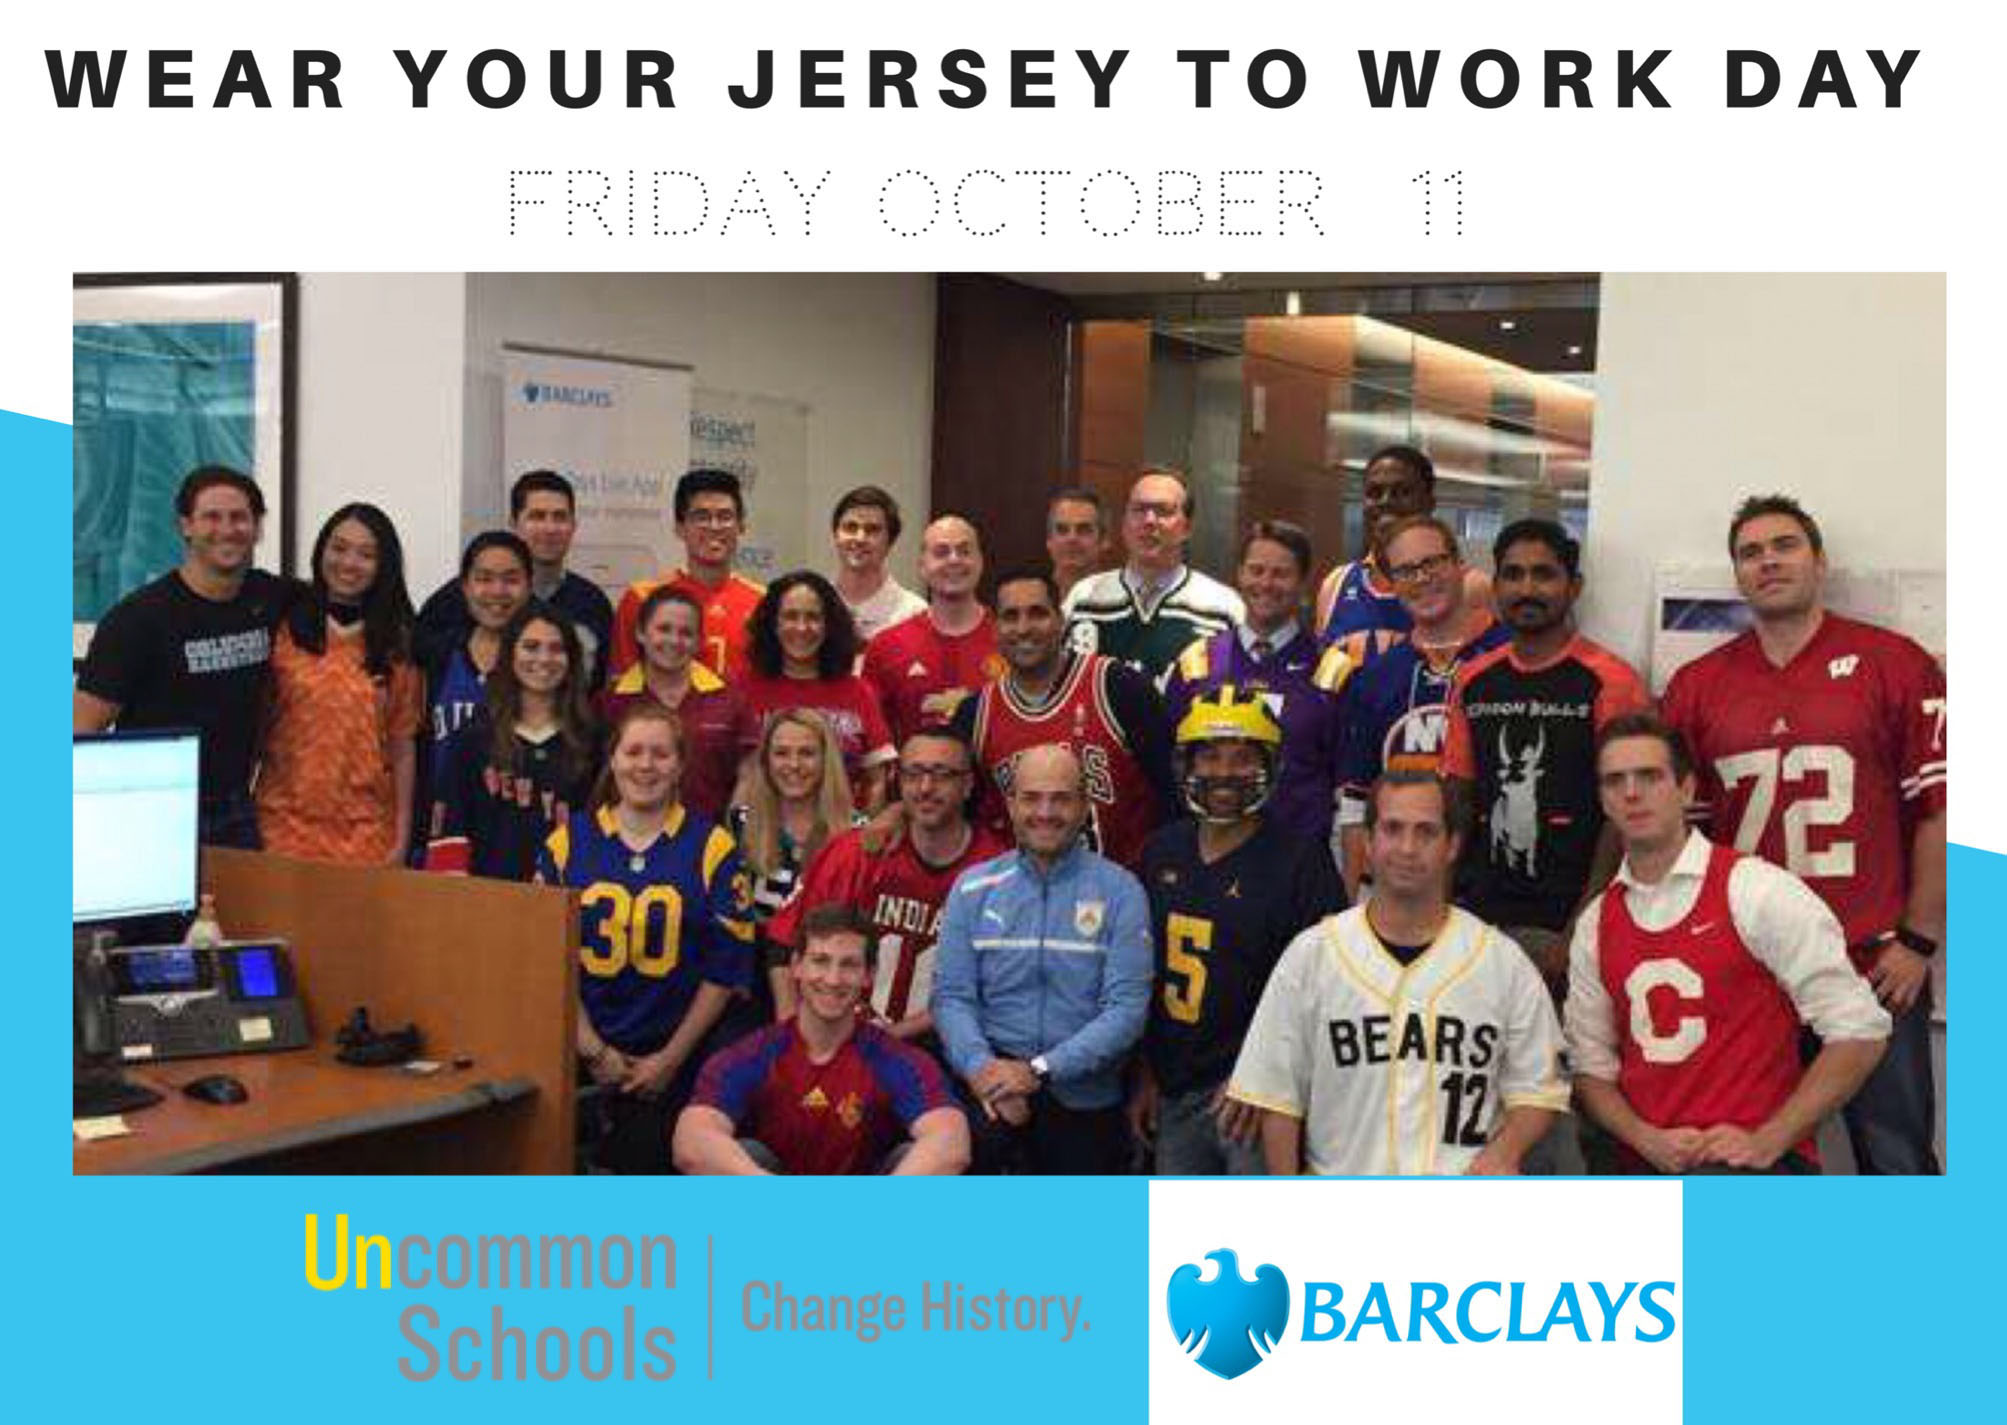 Barclays staff wearing jerseys 